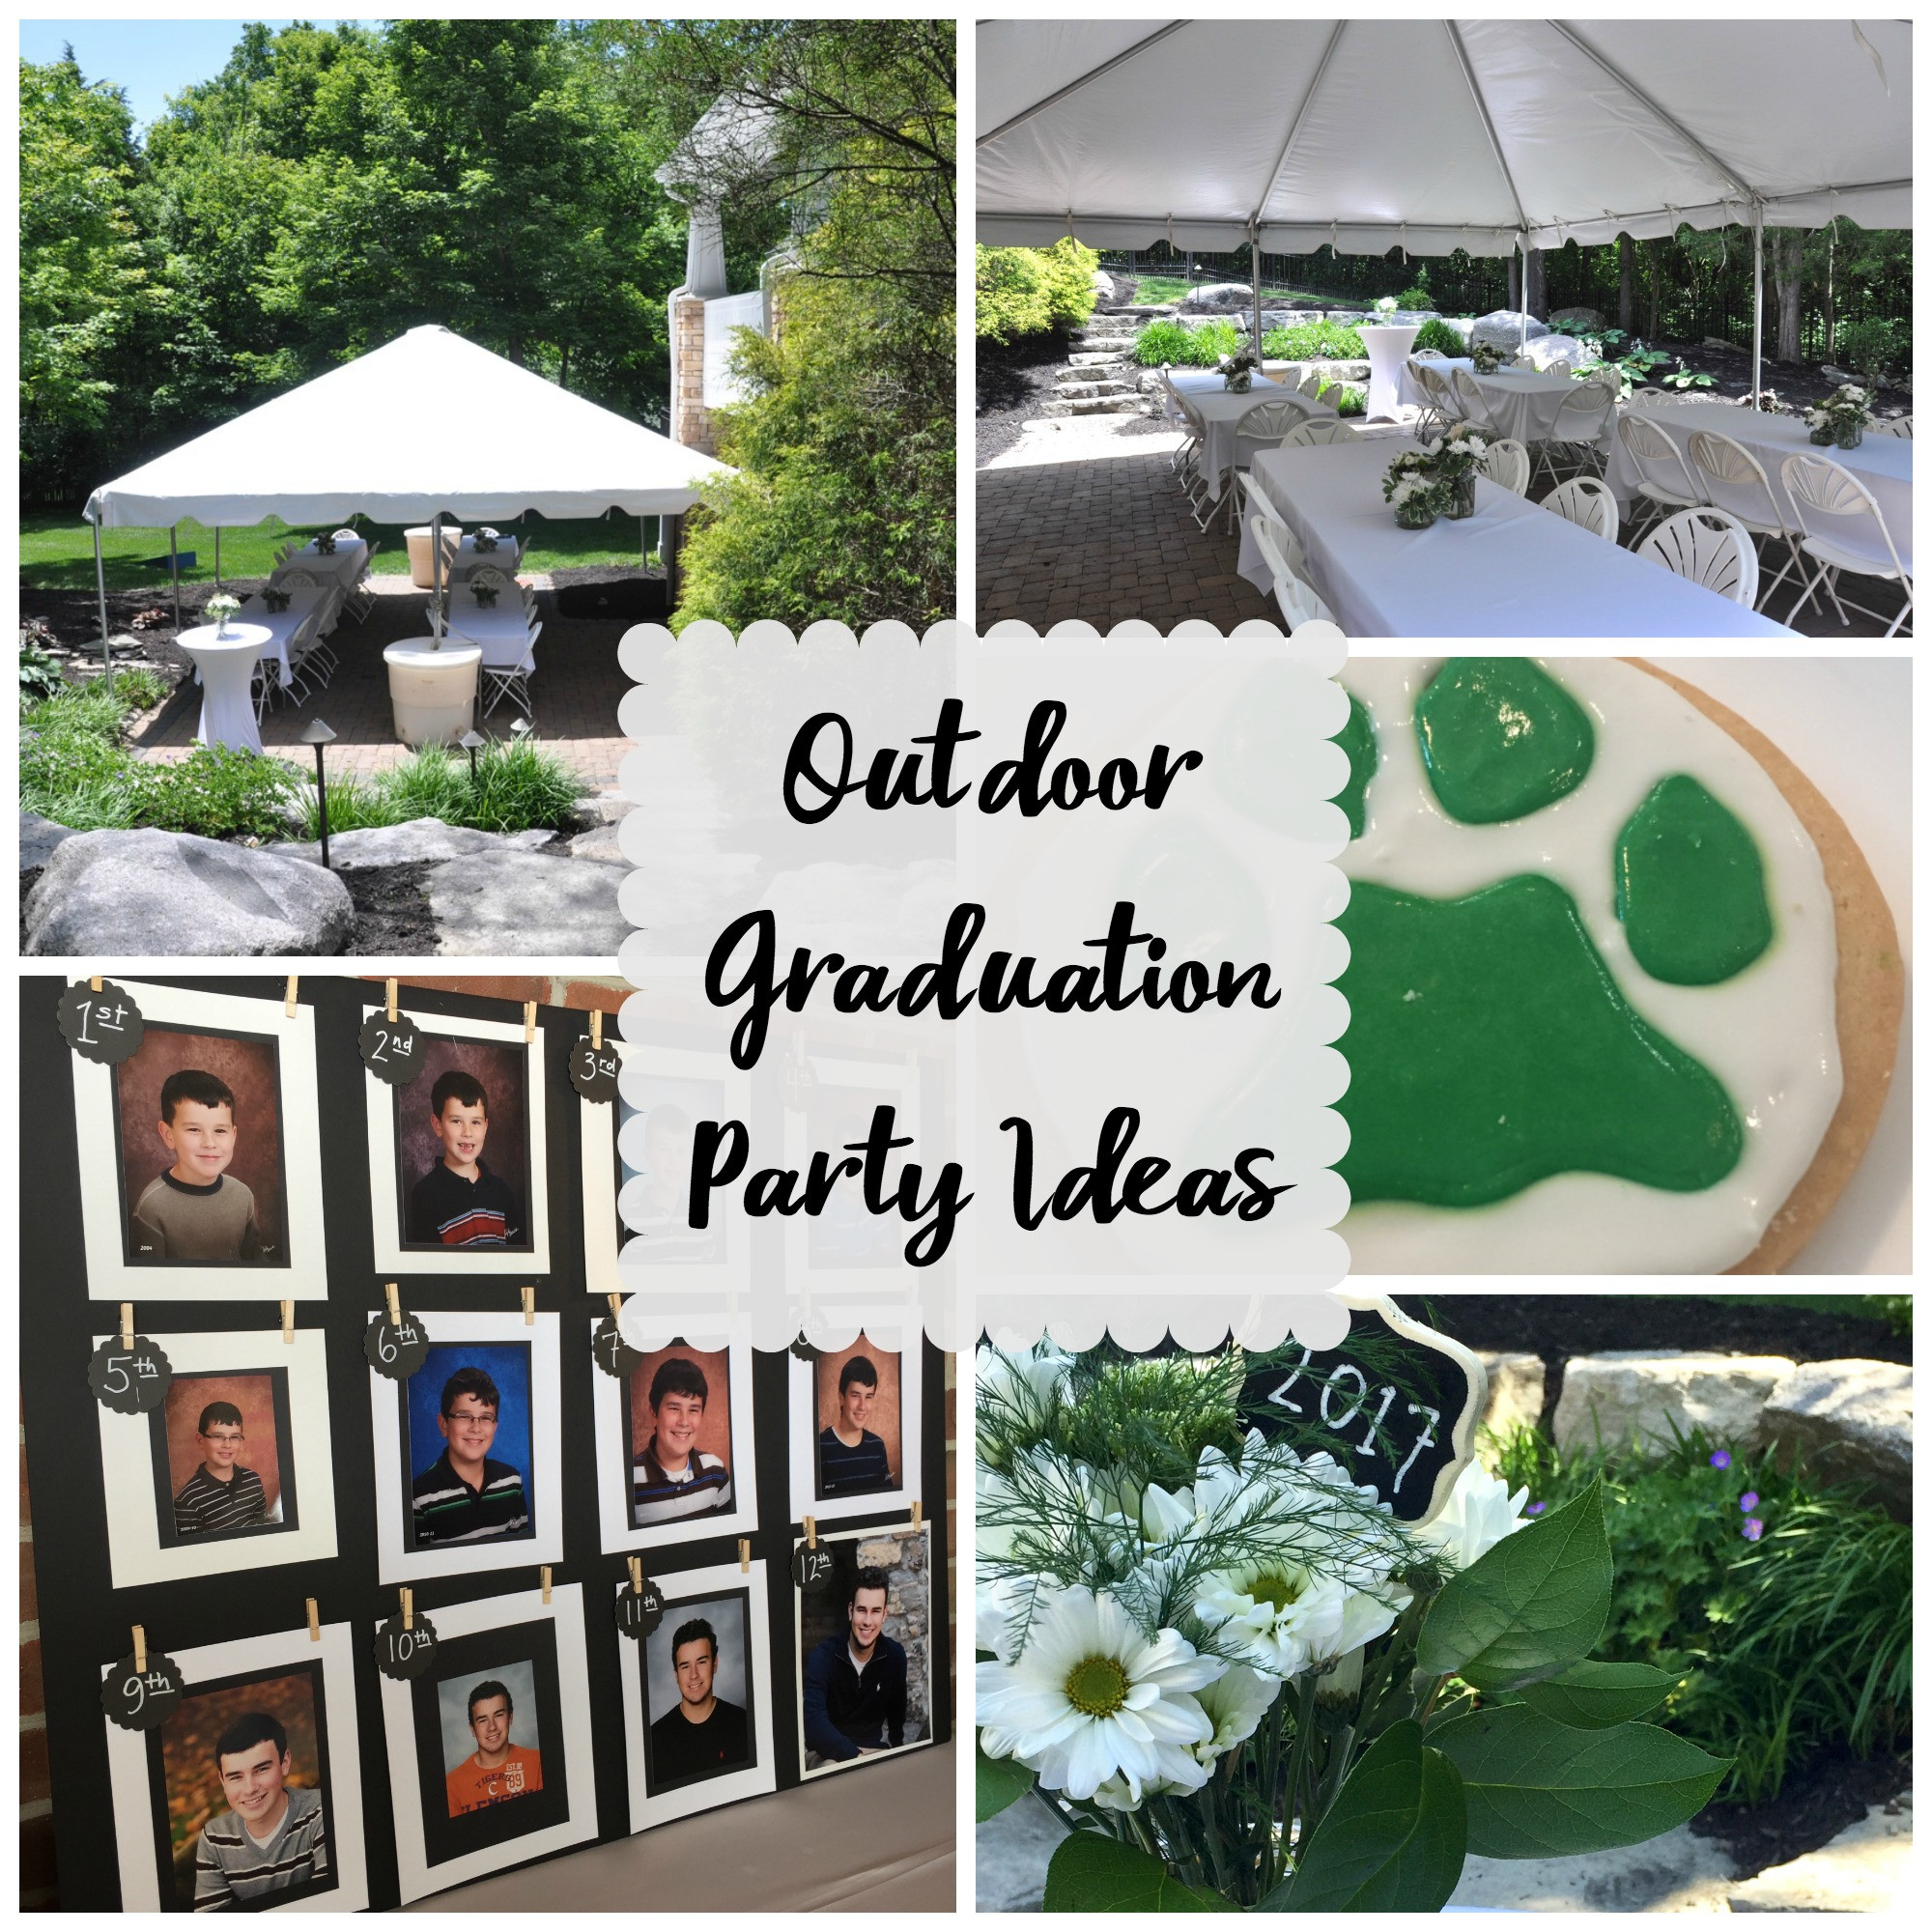 Backyard Graduation Party Food Ideas
 Outdoor Graduation Party Evolution of Style